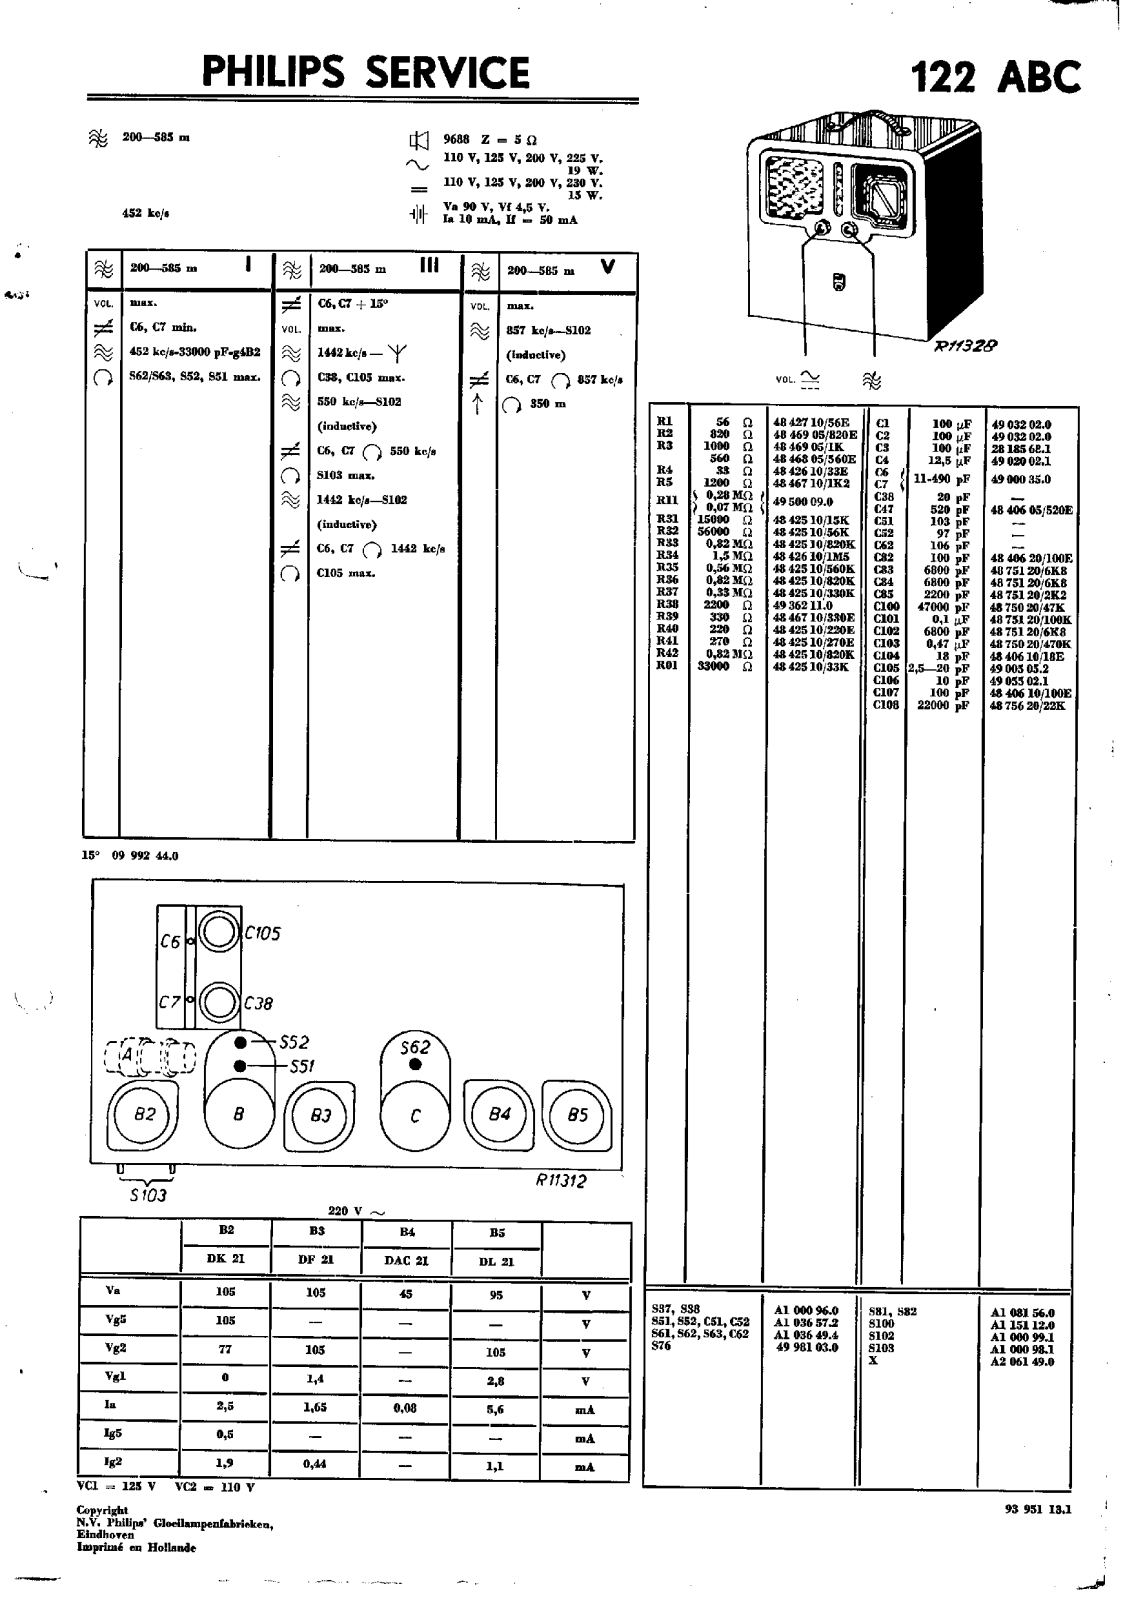 Philips 122-ABC Service Manual